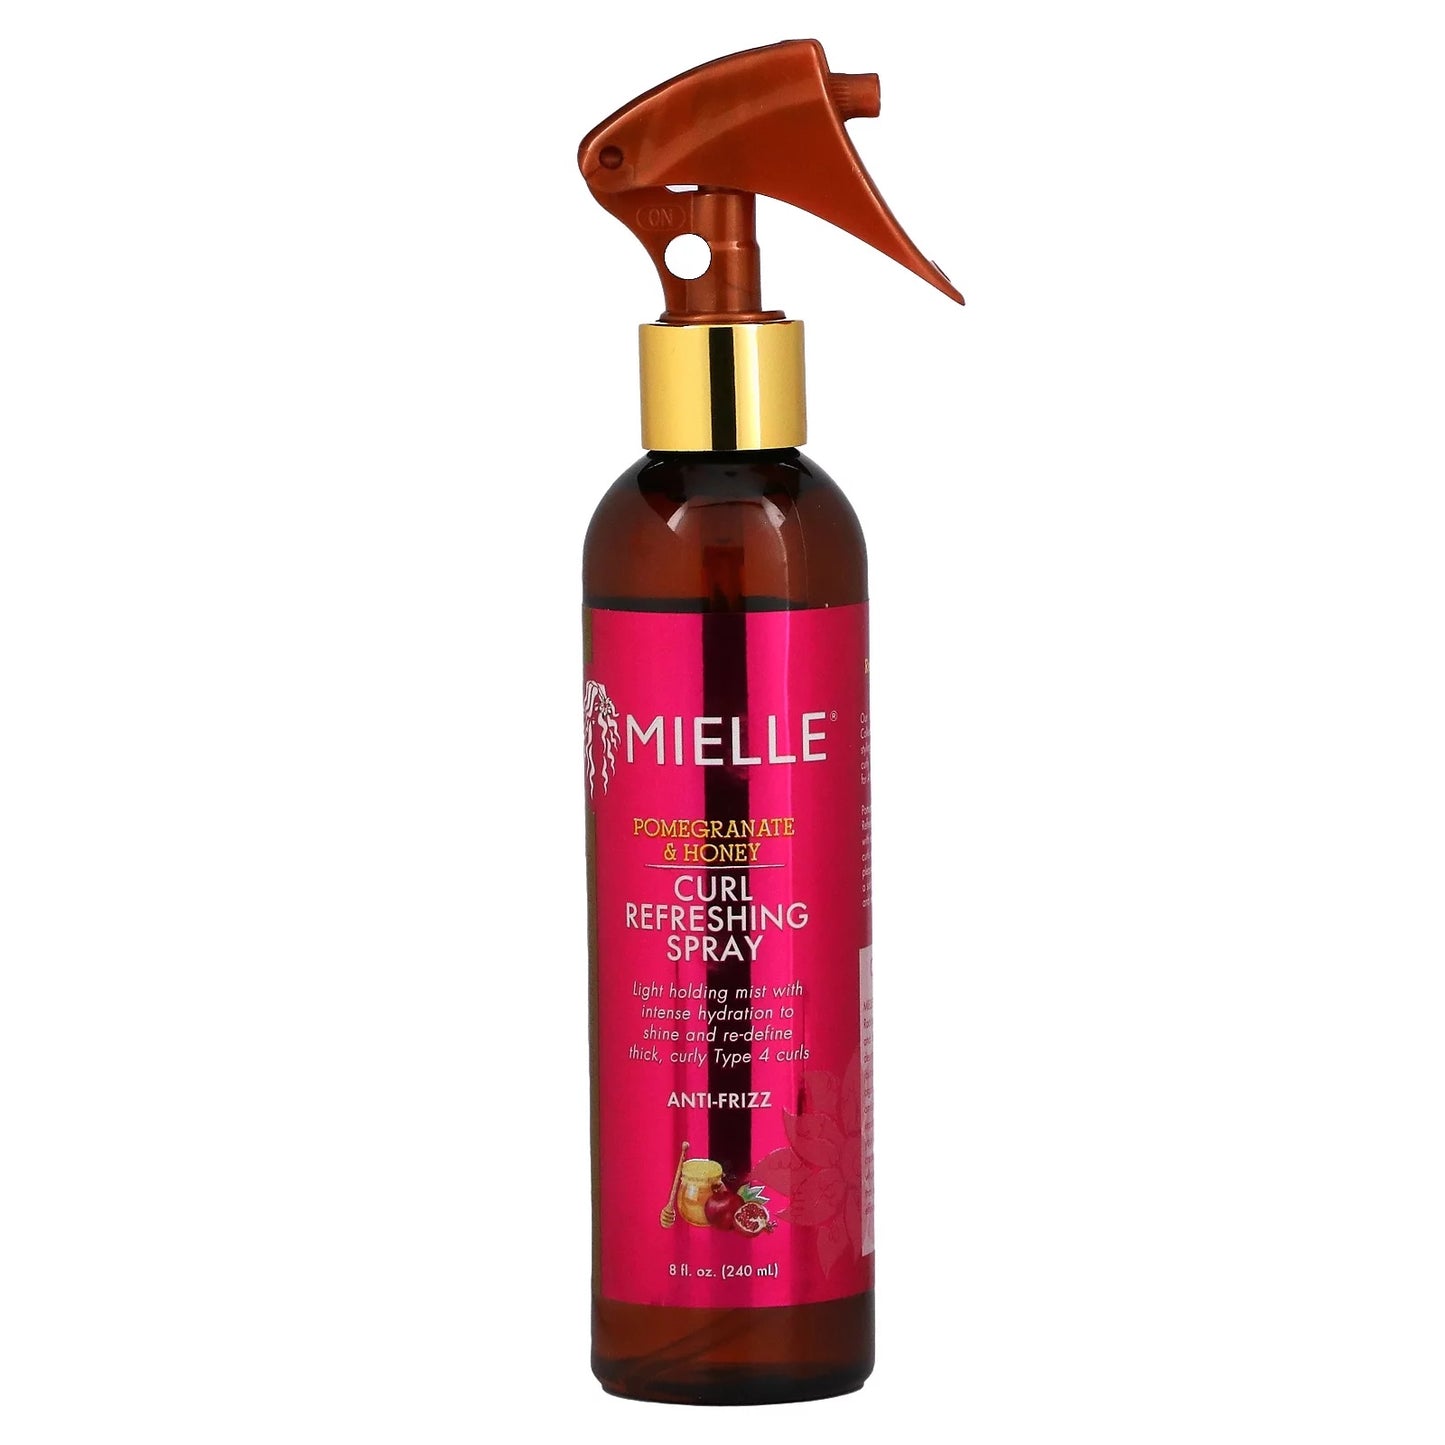 Mielle Organics Pomegranate & Honey Curl Refreshing Spray, Moisturizing Defining Mist 8-Fluid Ounces